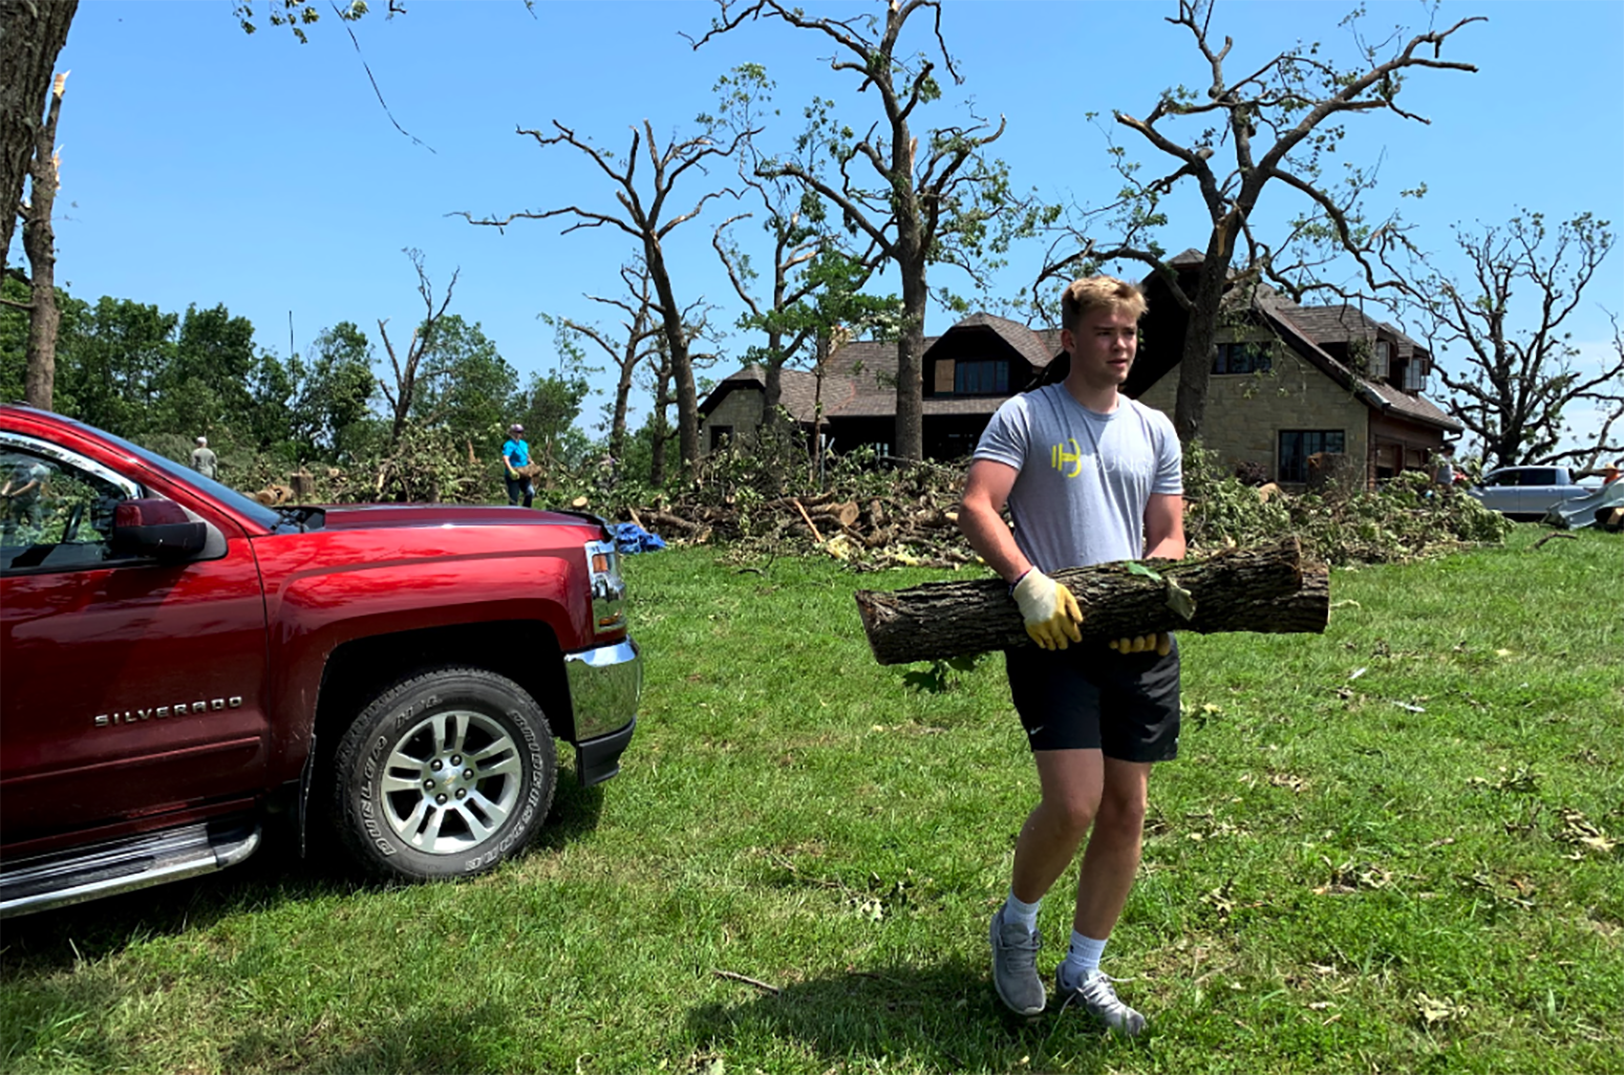 Bungii ‘circles the wagons,’ sending its truck drivers to aid Linwood tornado survivors